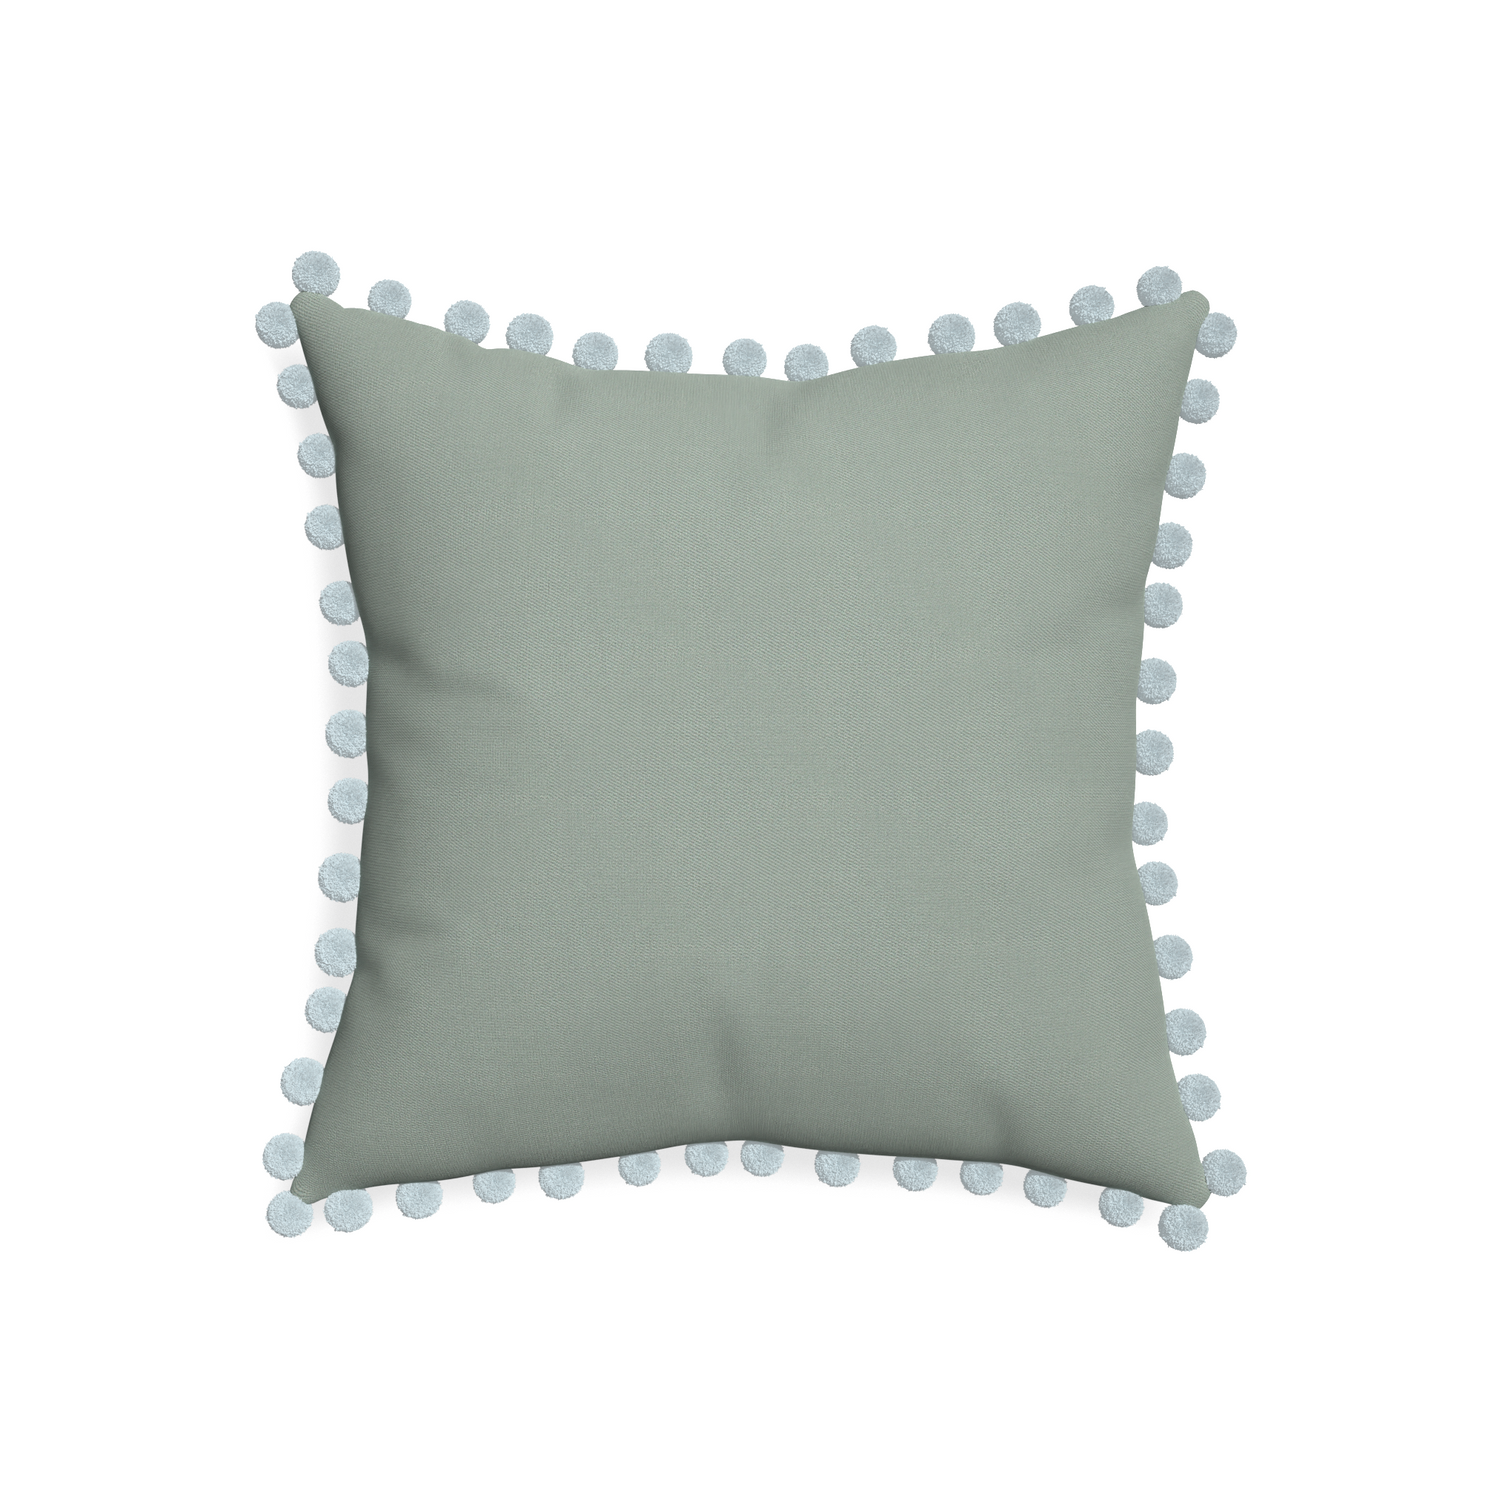 20-square sage custom pillow with powder pom pom on white background